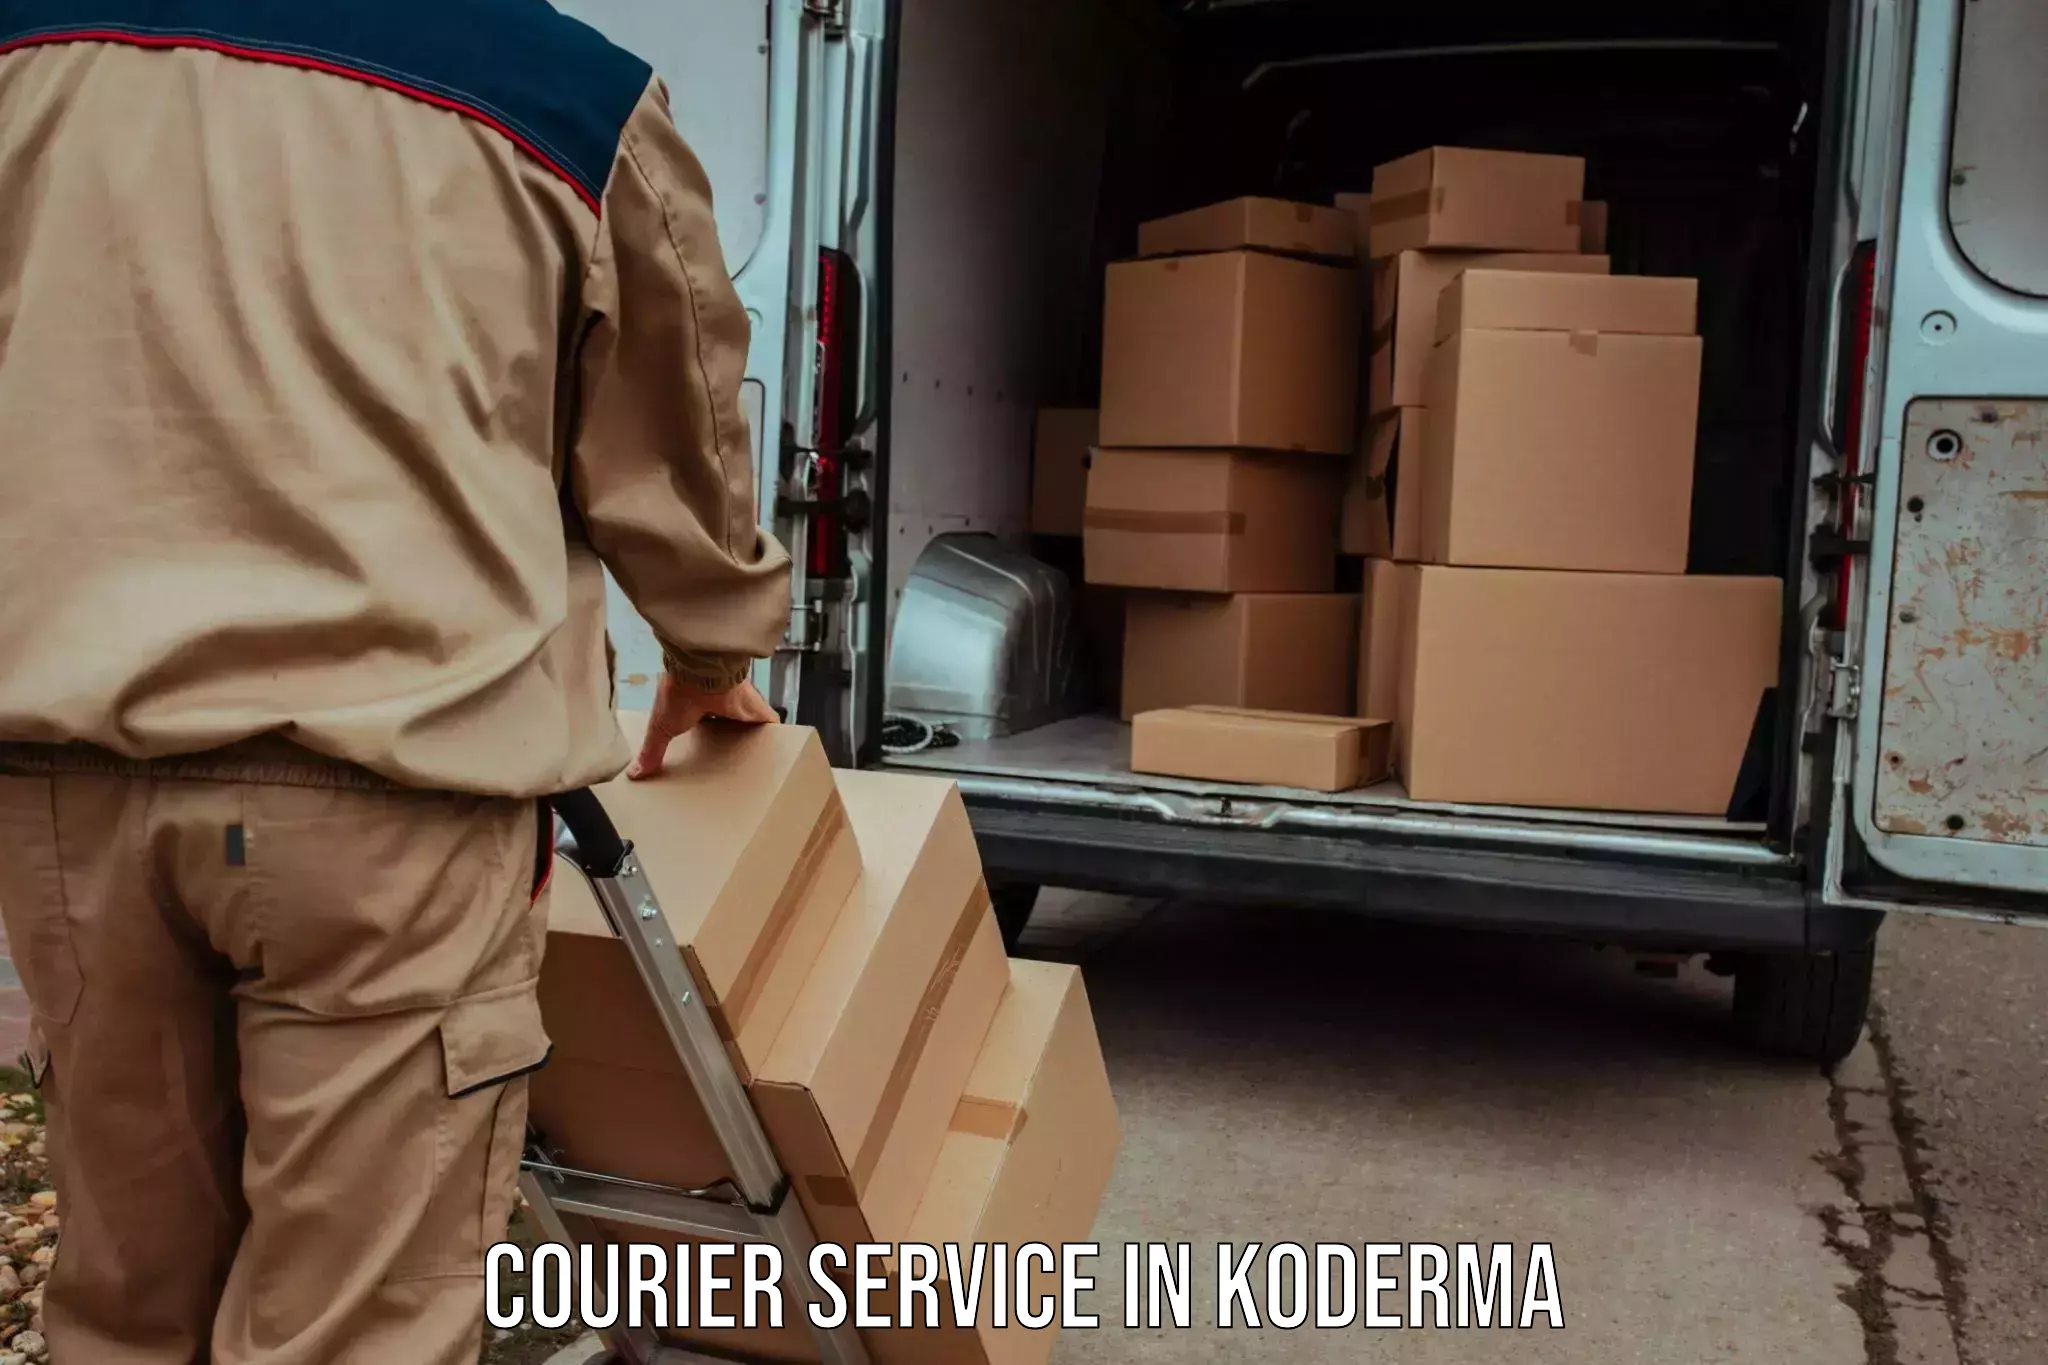 E-commerce fulfillment in Koderma